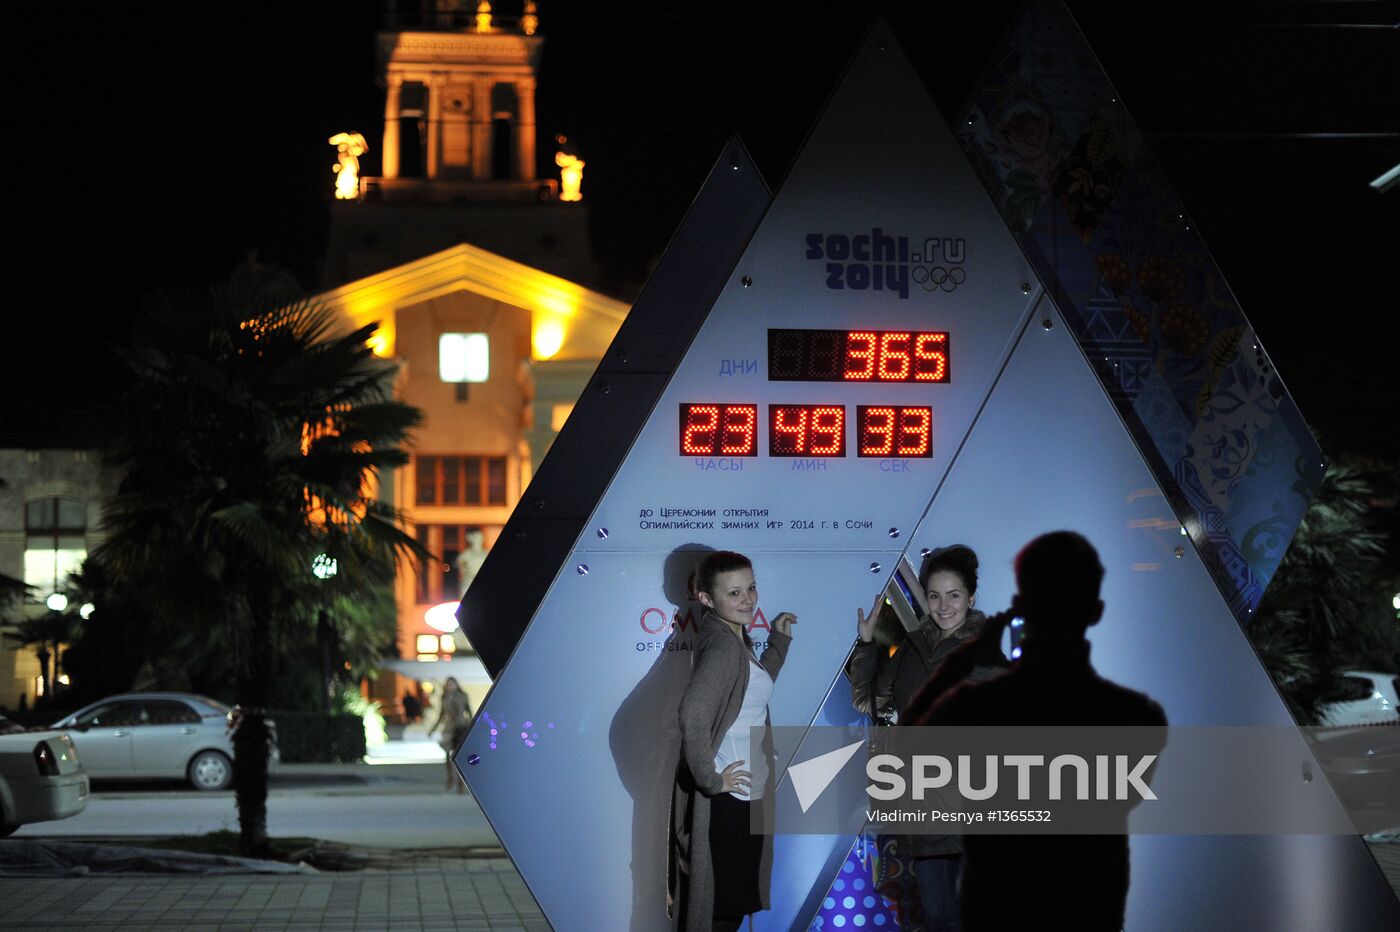 365 Days on Olympics countdown clock